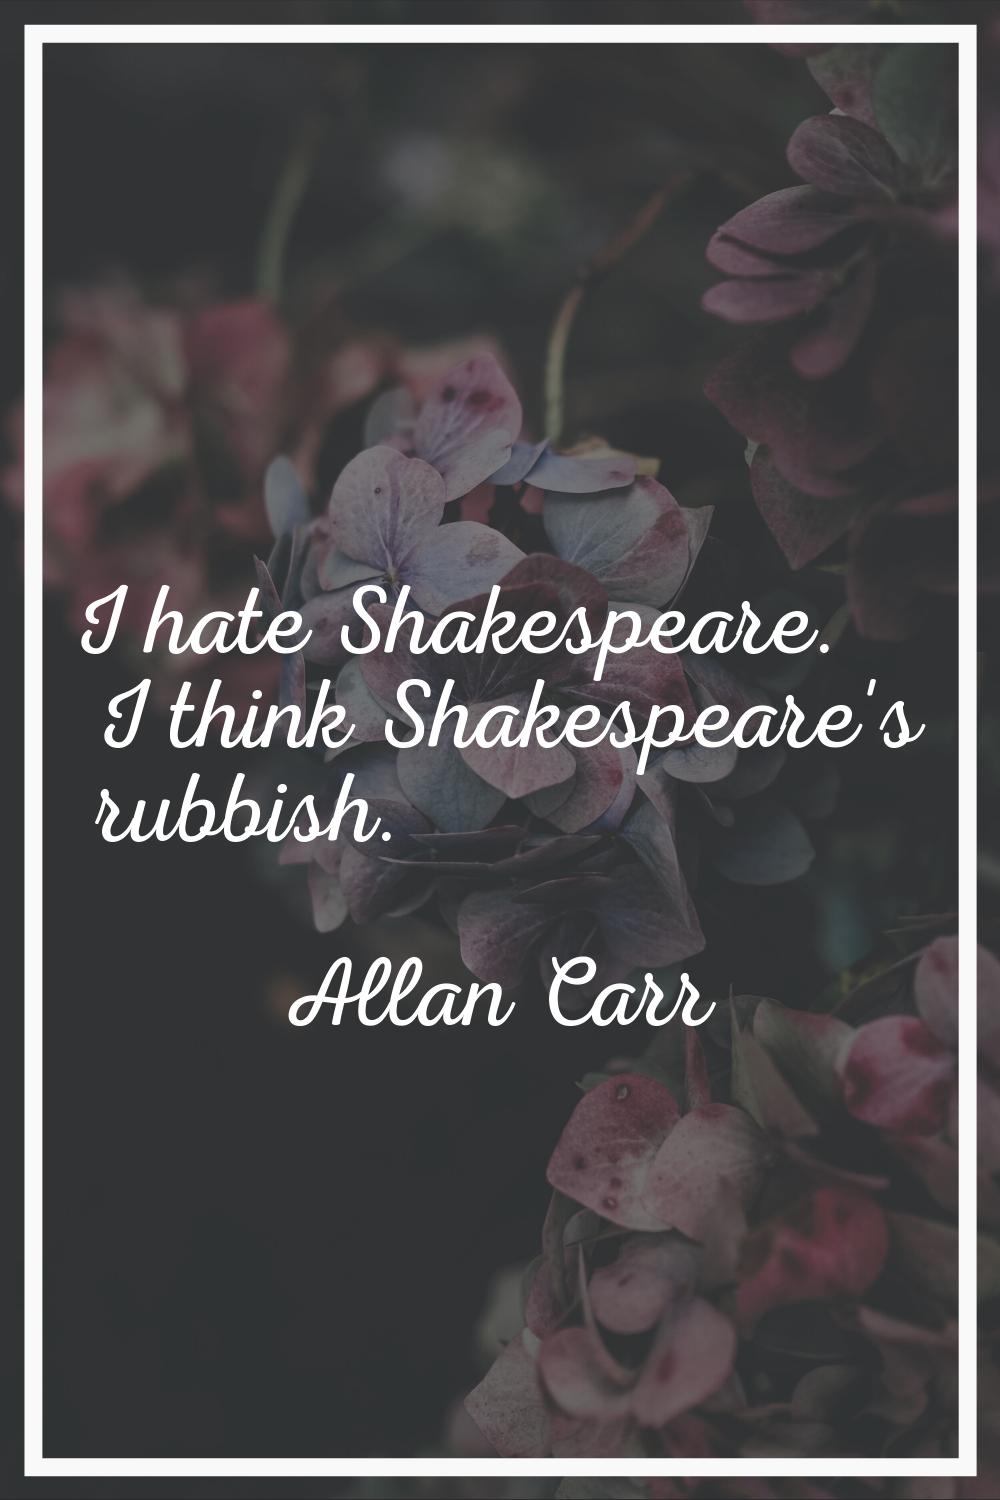 I hate Shakespeare. I think Shakespeare's rubbish.